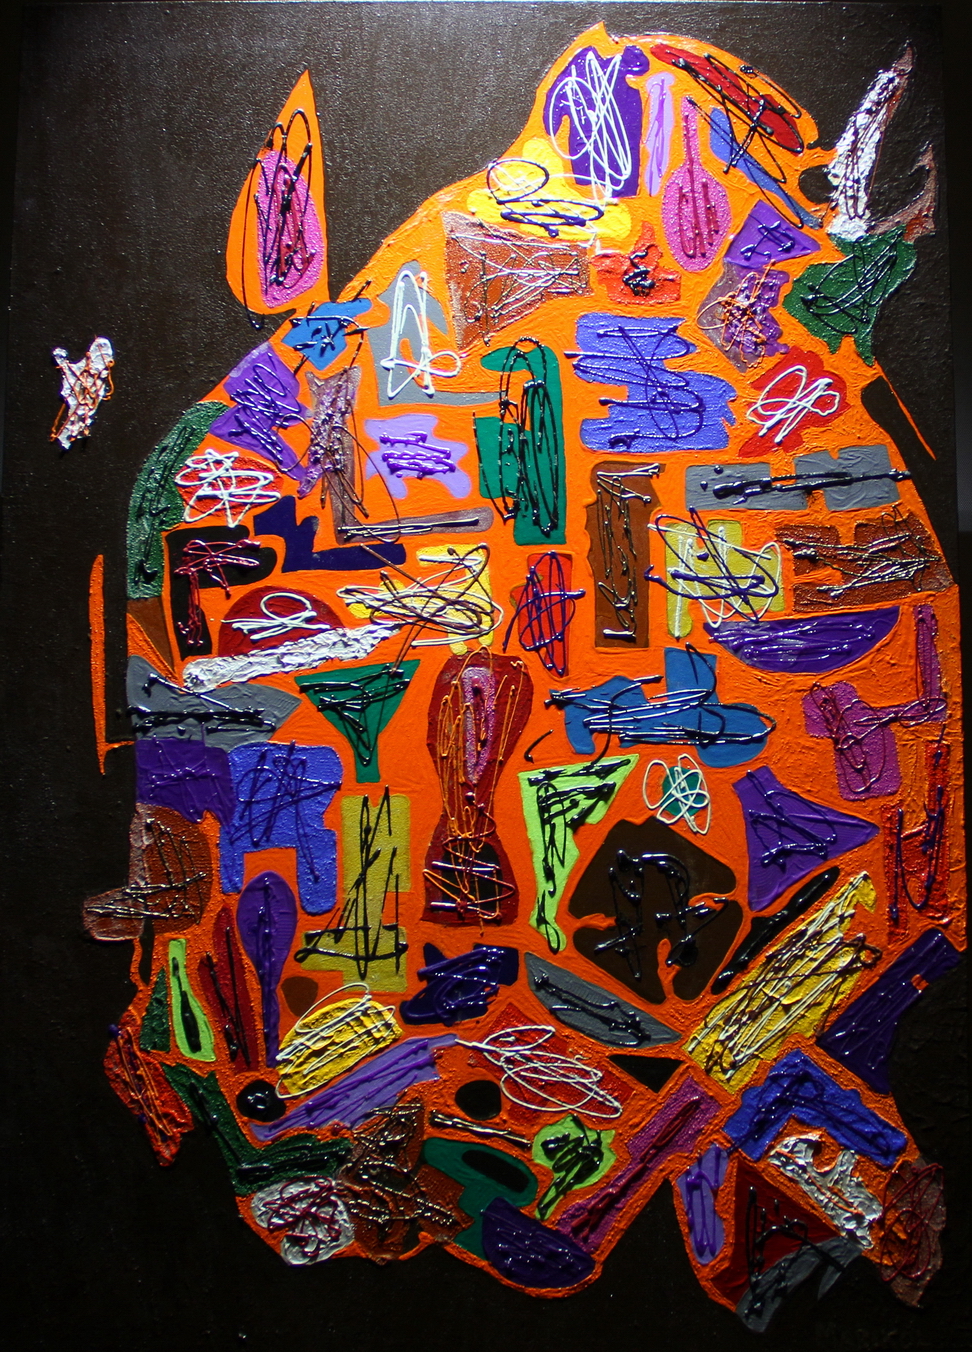 IMG_8963.JPG - Marikol - The devil inside - 2011 - acrilico e malta su tela 70 x 100 cm